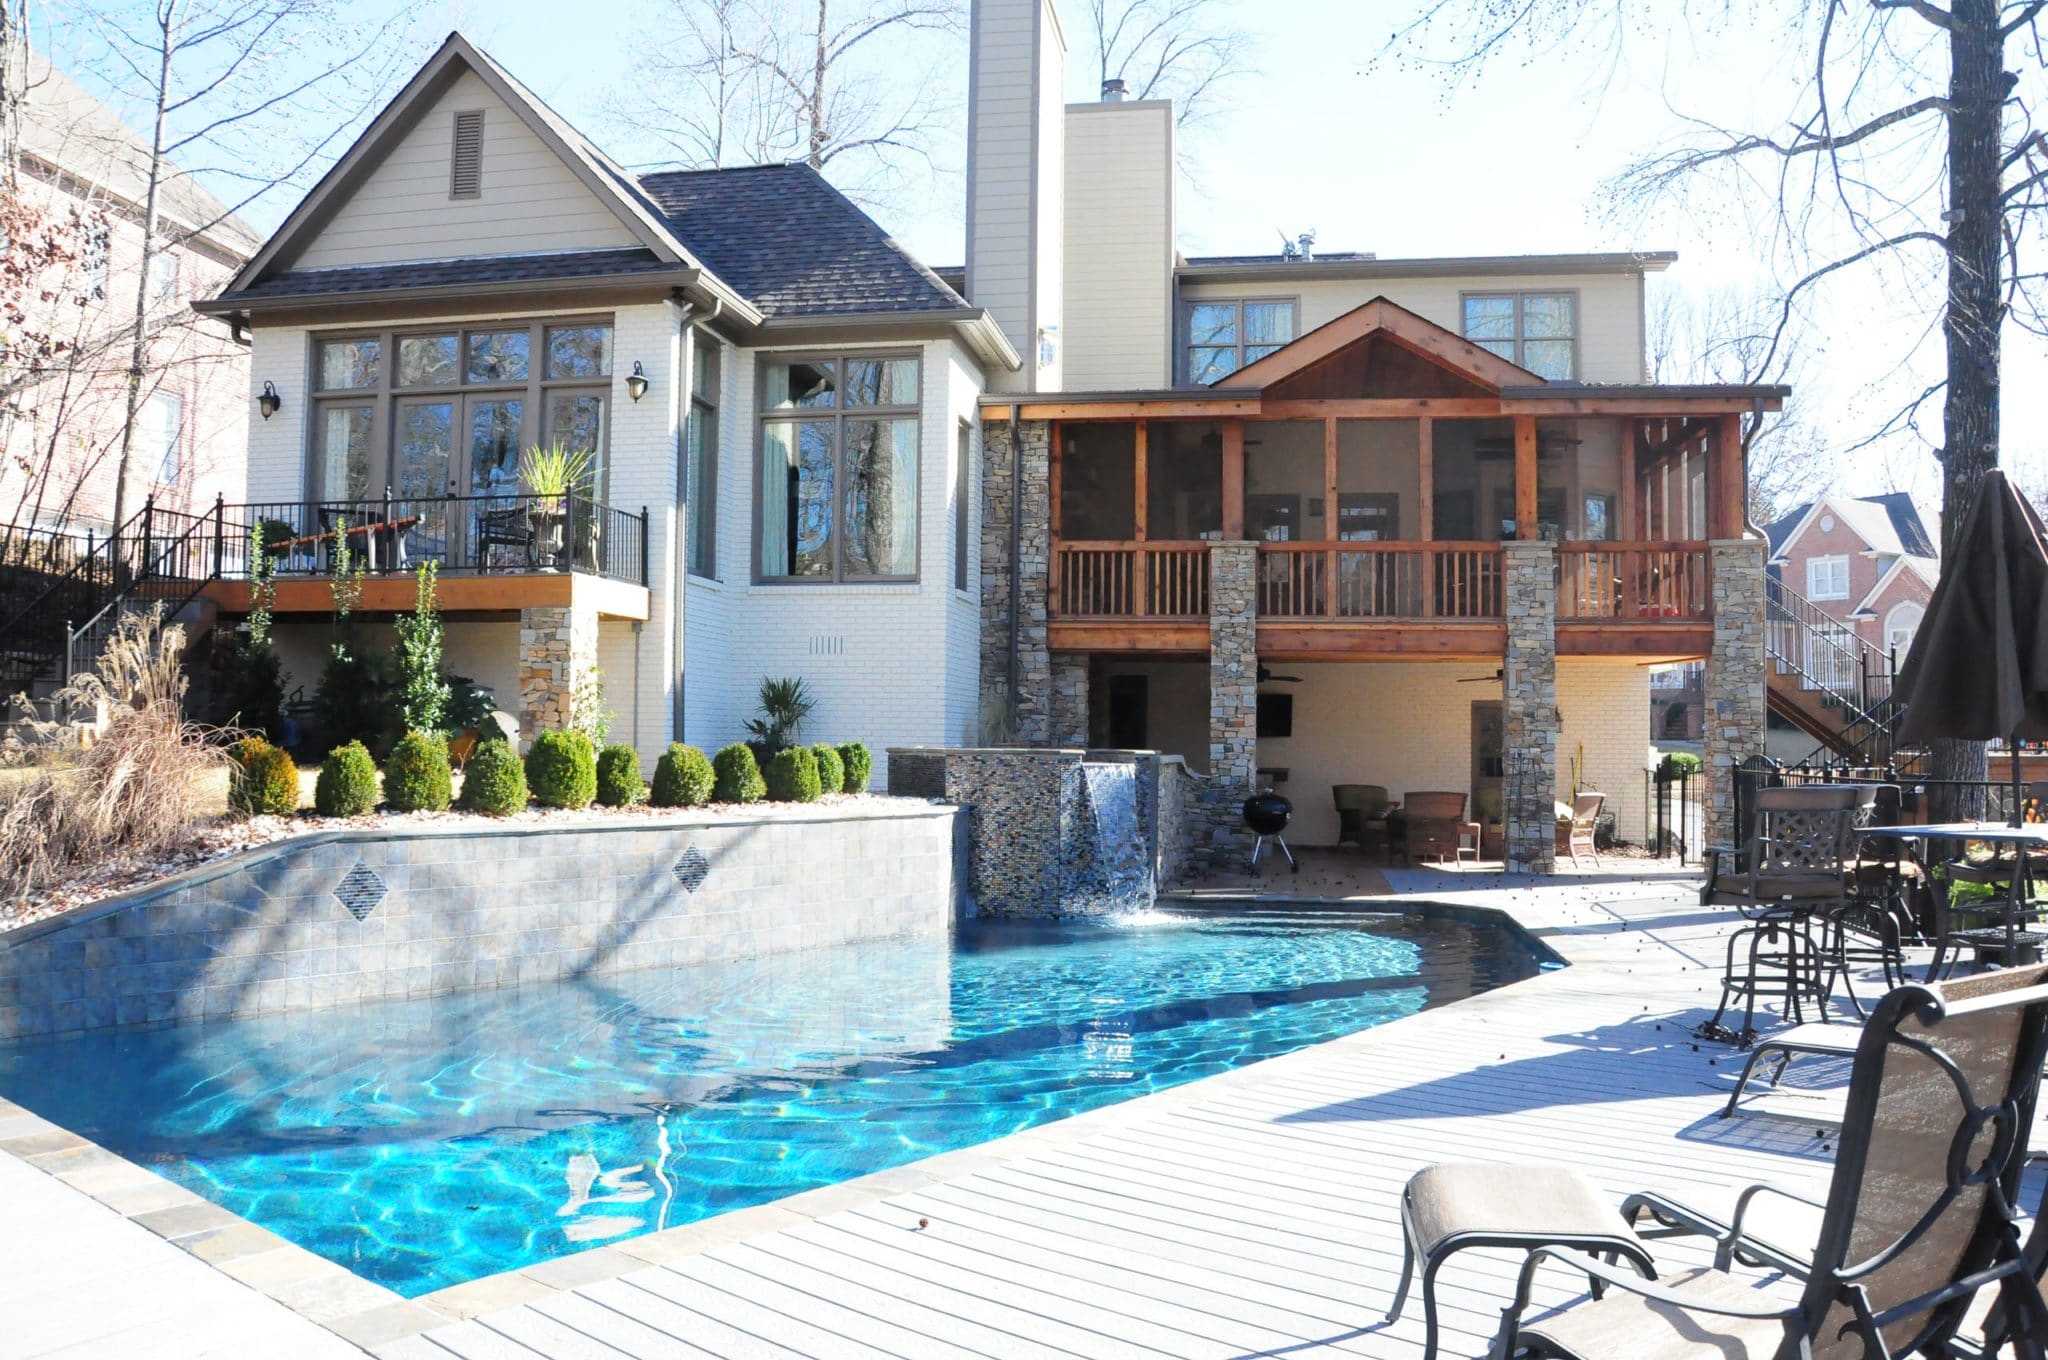 stylish swimming pool with waterfall and backyard patio